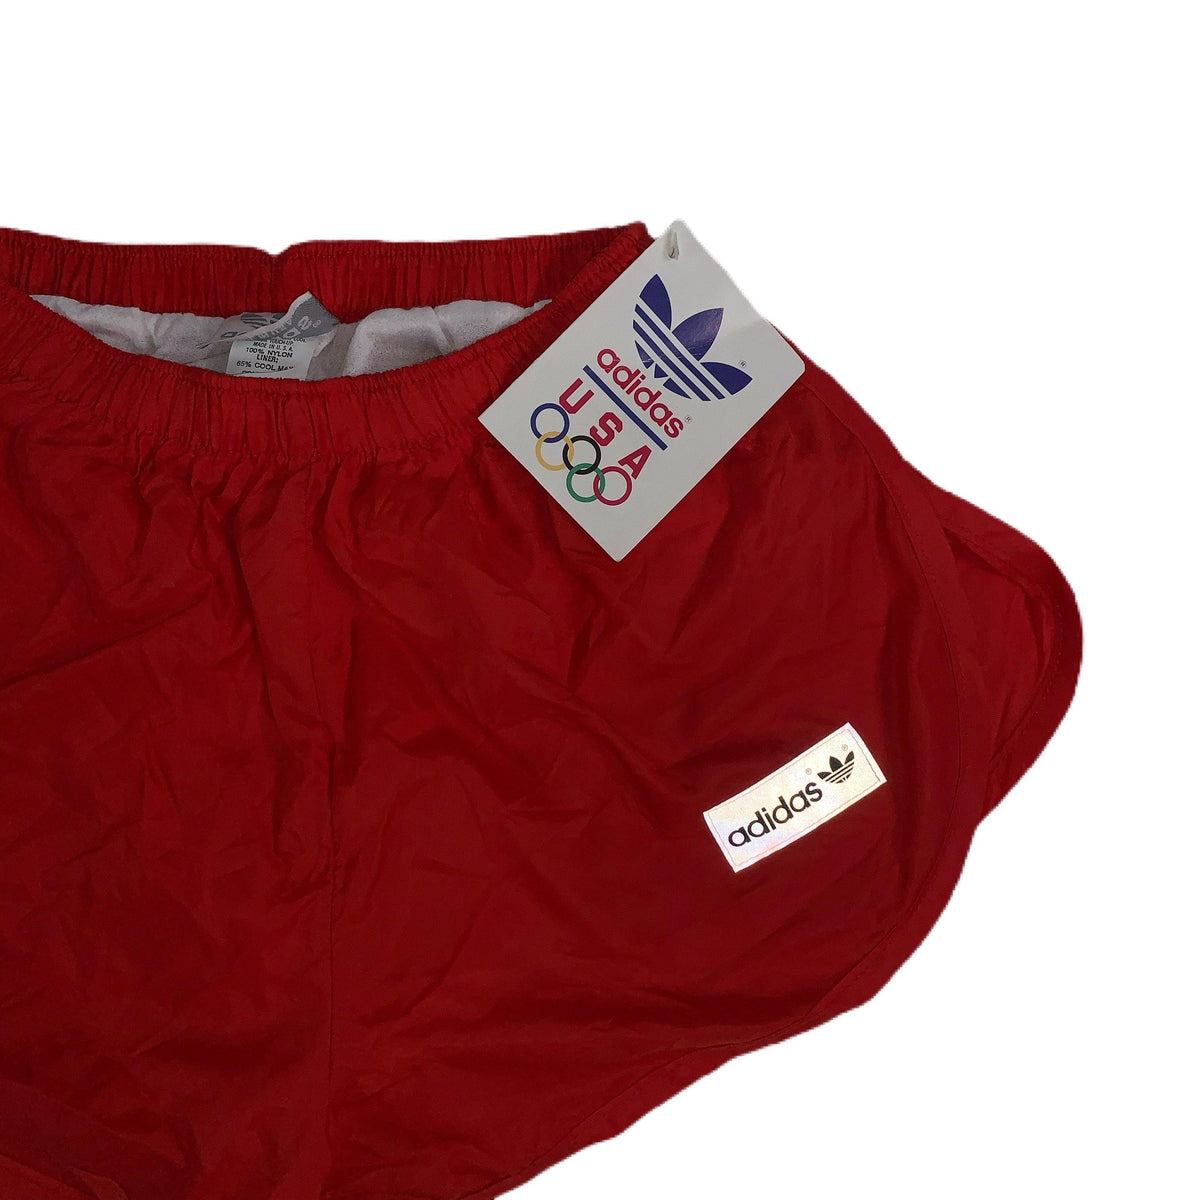 Vintage Original Adidas USA Olympics Reflective Shorts with reflective detail